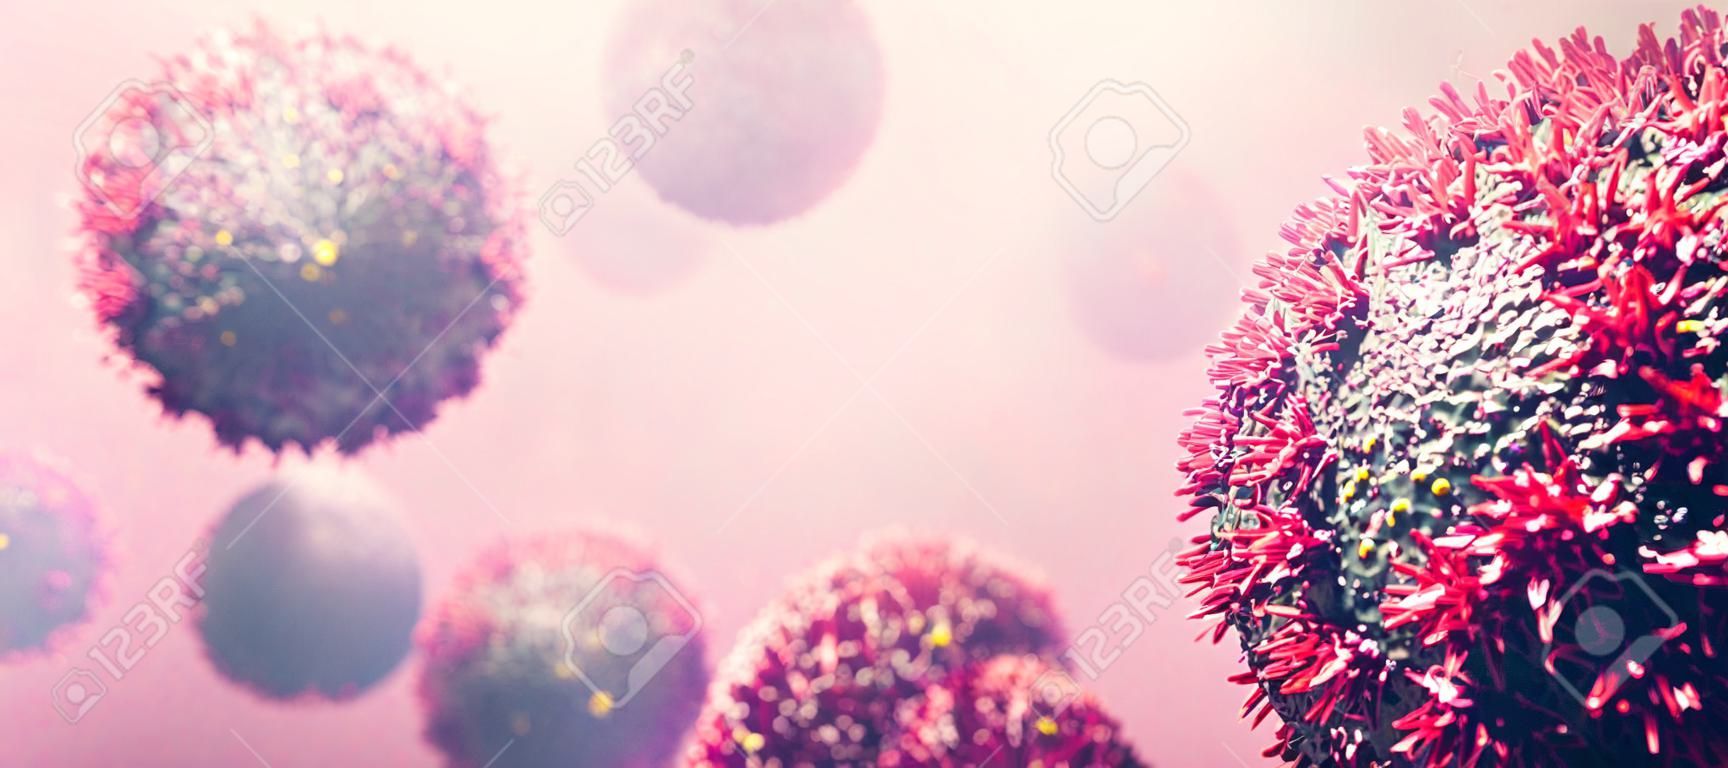 Organisme d'attaque du coronavirus COVID-19. Virus Corona provoquant une pandémie. Illustration 3D